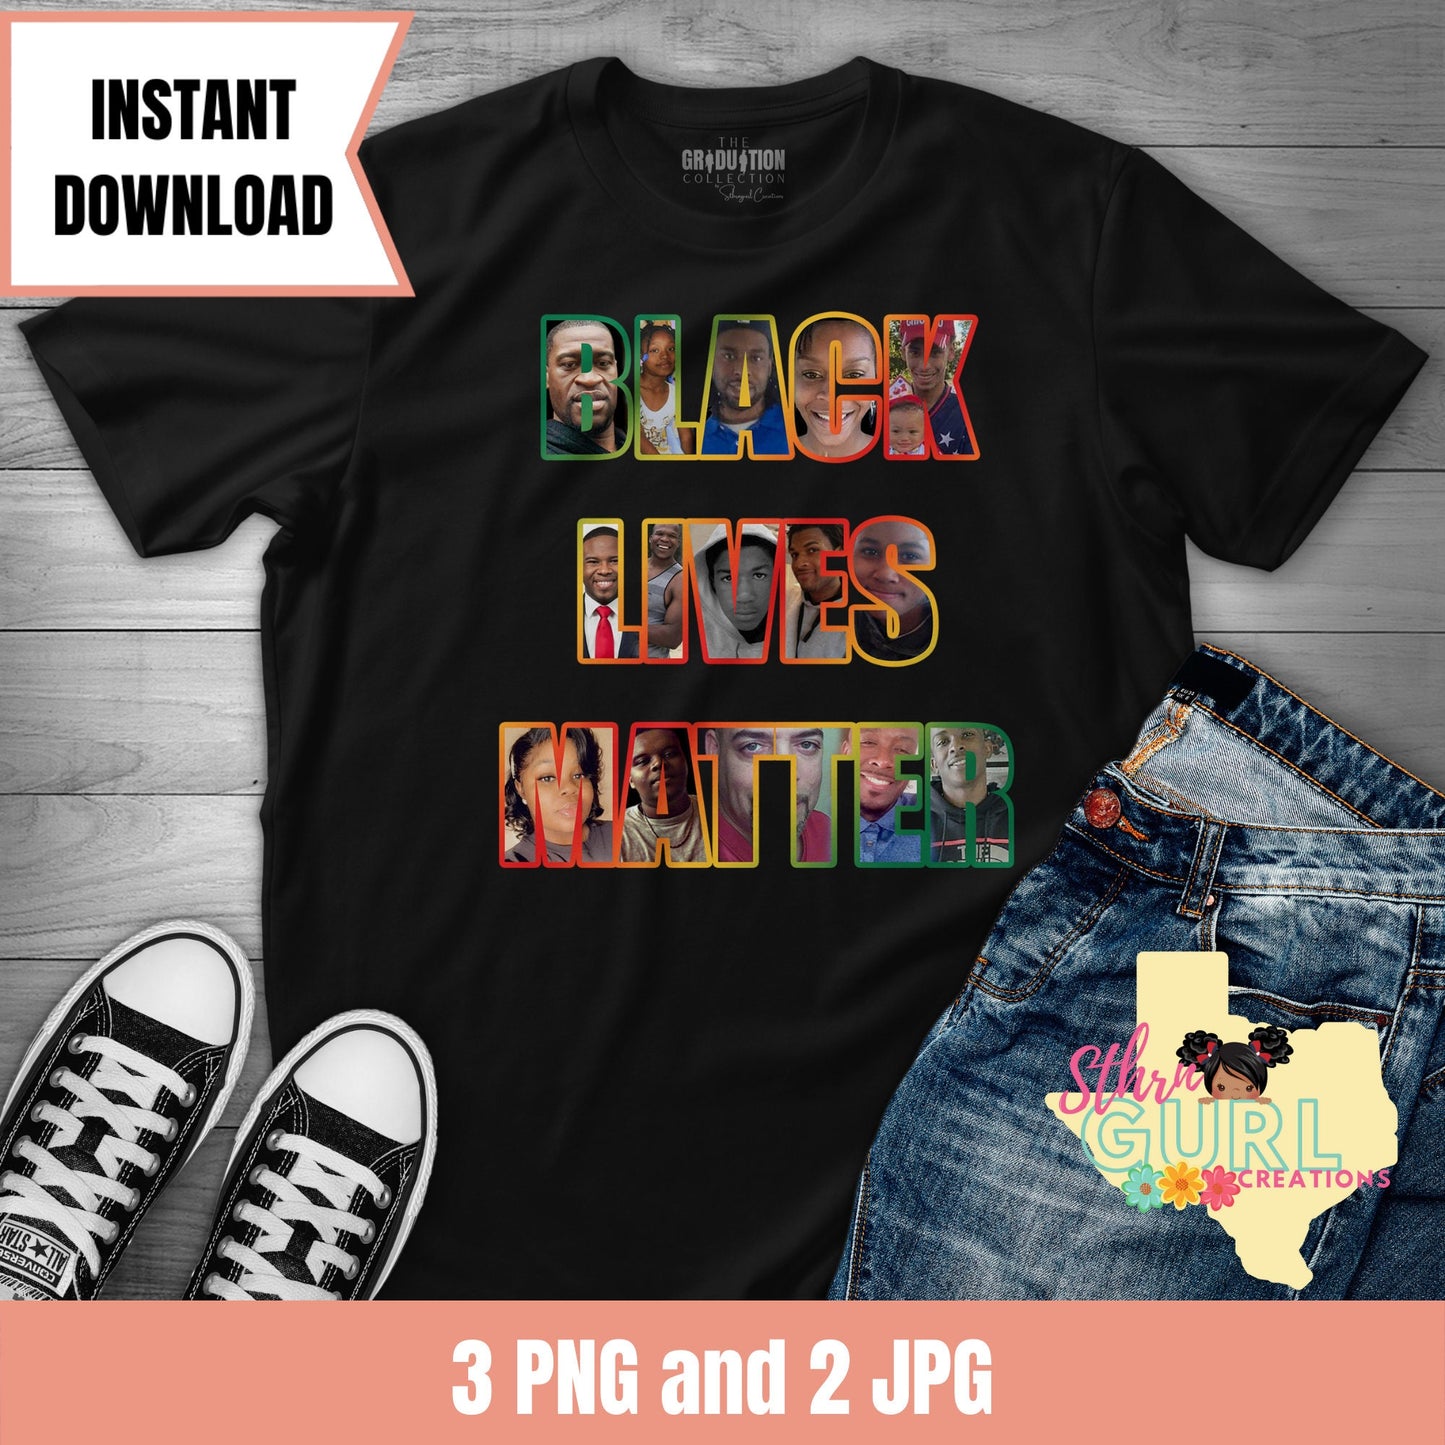 Black Lives Matter Photo Fill Design, PNG, Black History Month Shirt Design, Sublimation Download, DTF, Print and Cut, Print on Demand - SthrngurlCreations